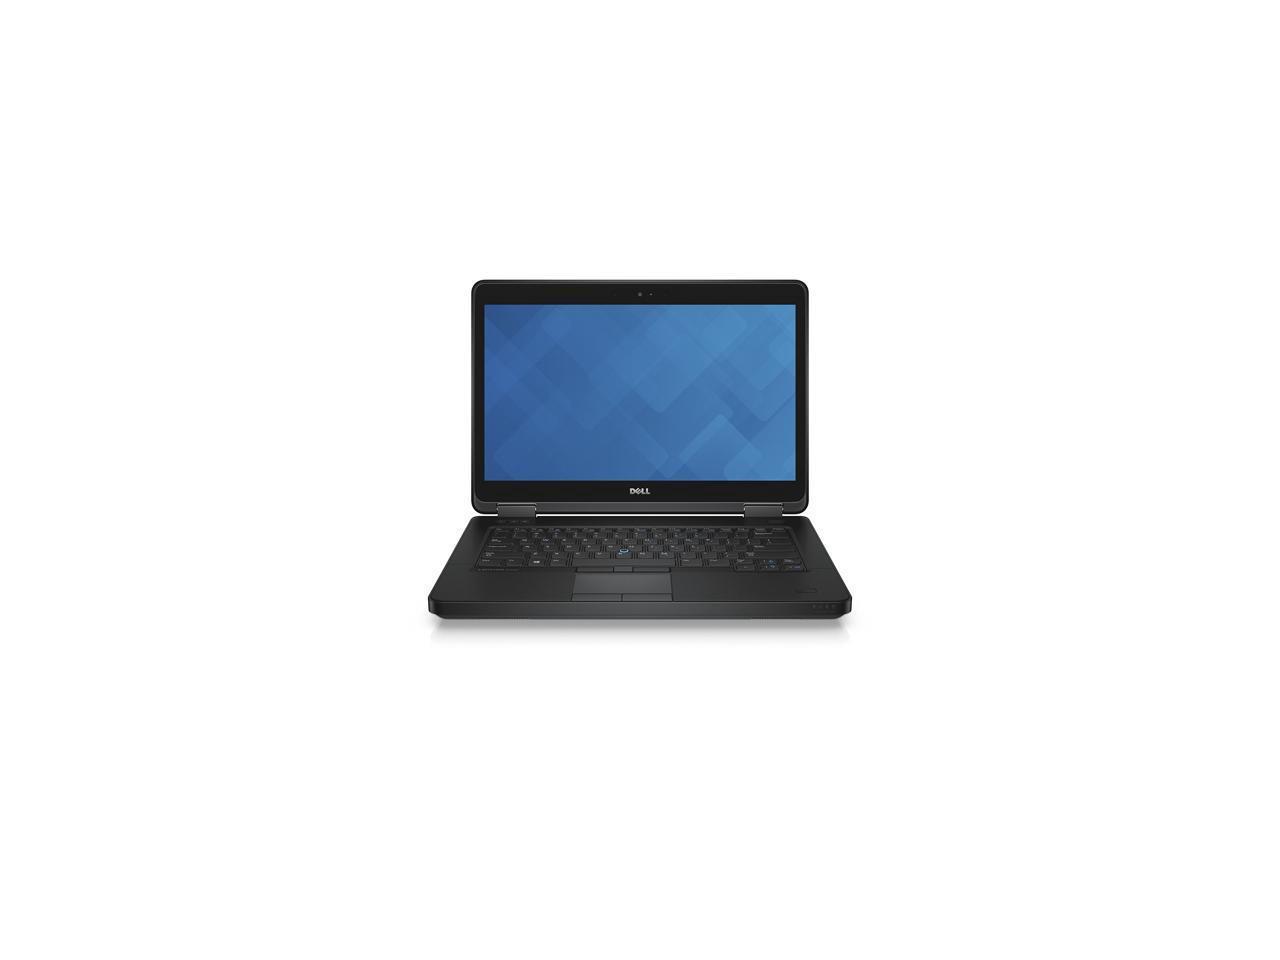 Refurbished Dell Latitude E5440 Laptop Computer Intel Core i5 Processor, 8GB Ram, 500GB Hard Drive, Windows 11 Operating System